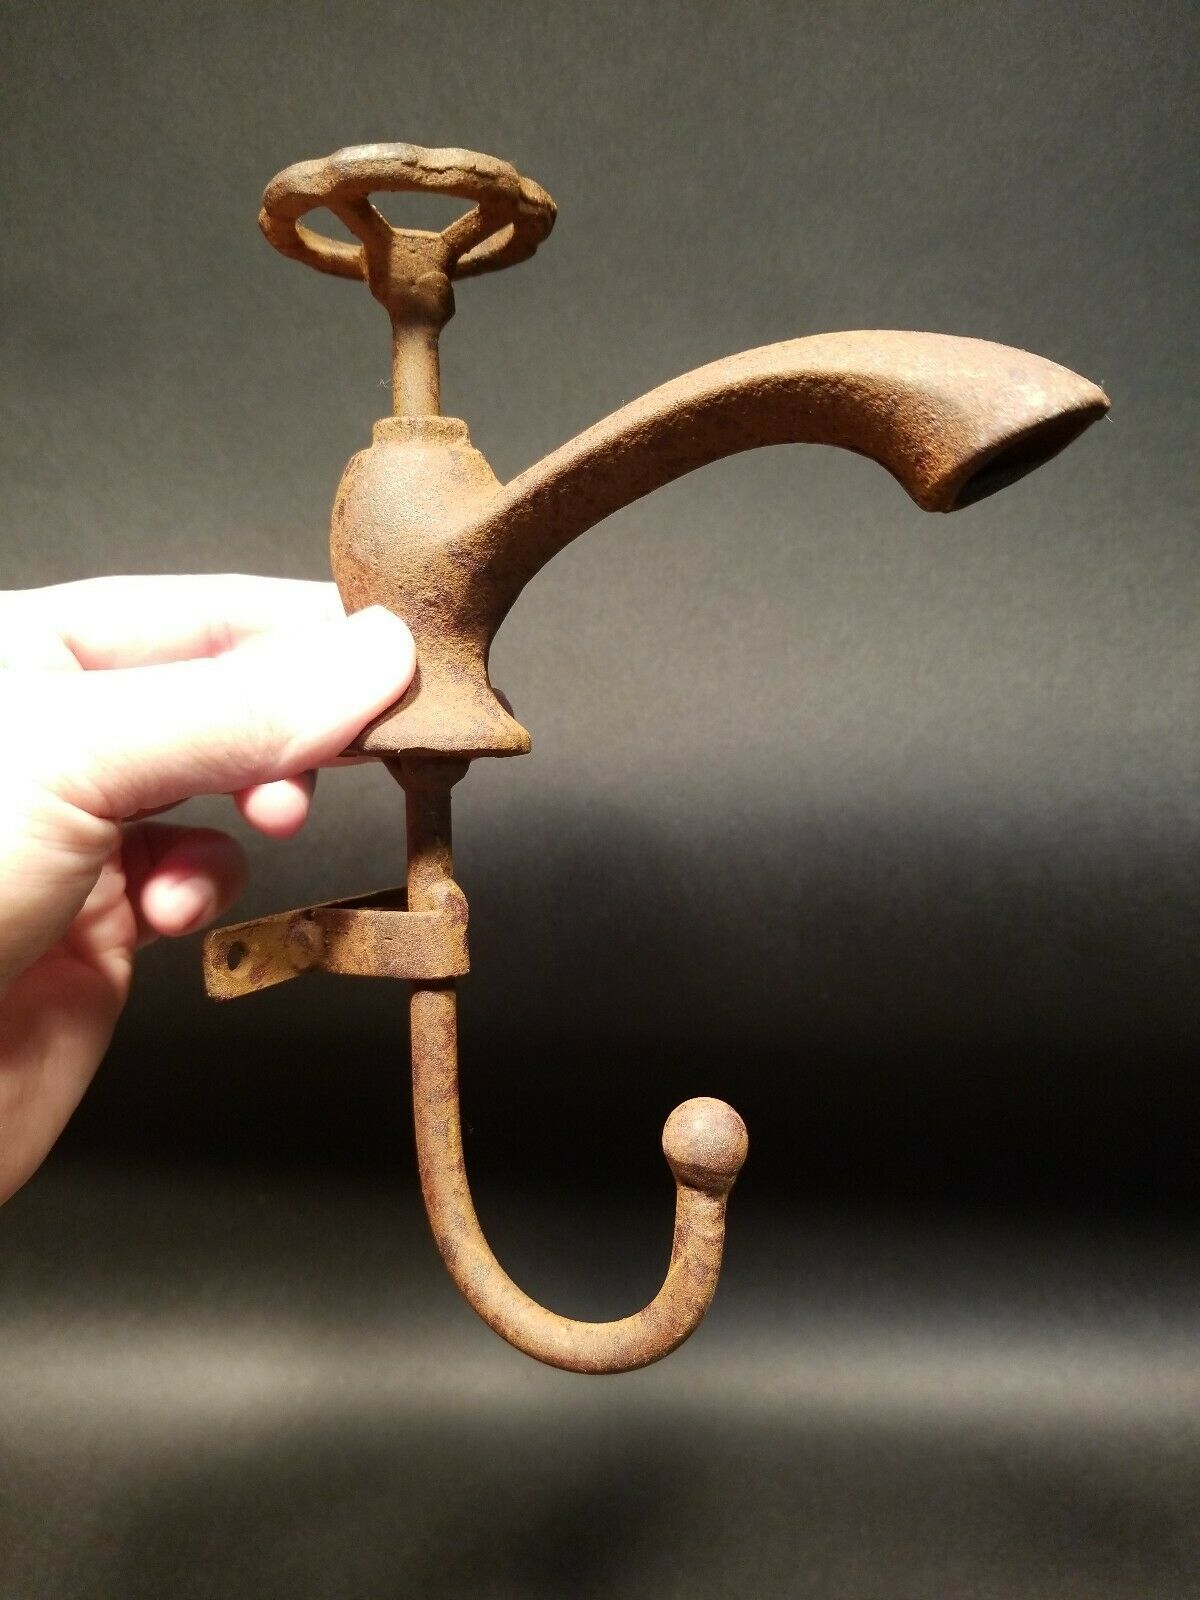 Antique Vintage Style Cast Iron Garden Faucet Coat Hook - Early Home Decor